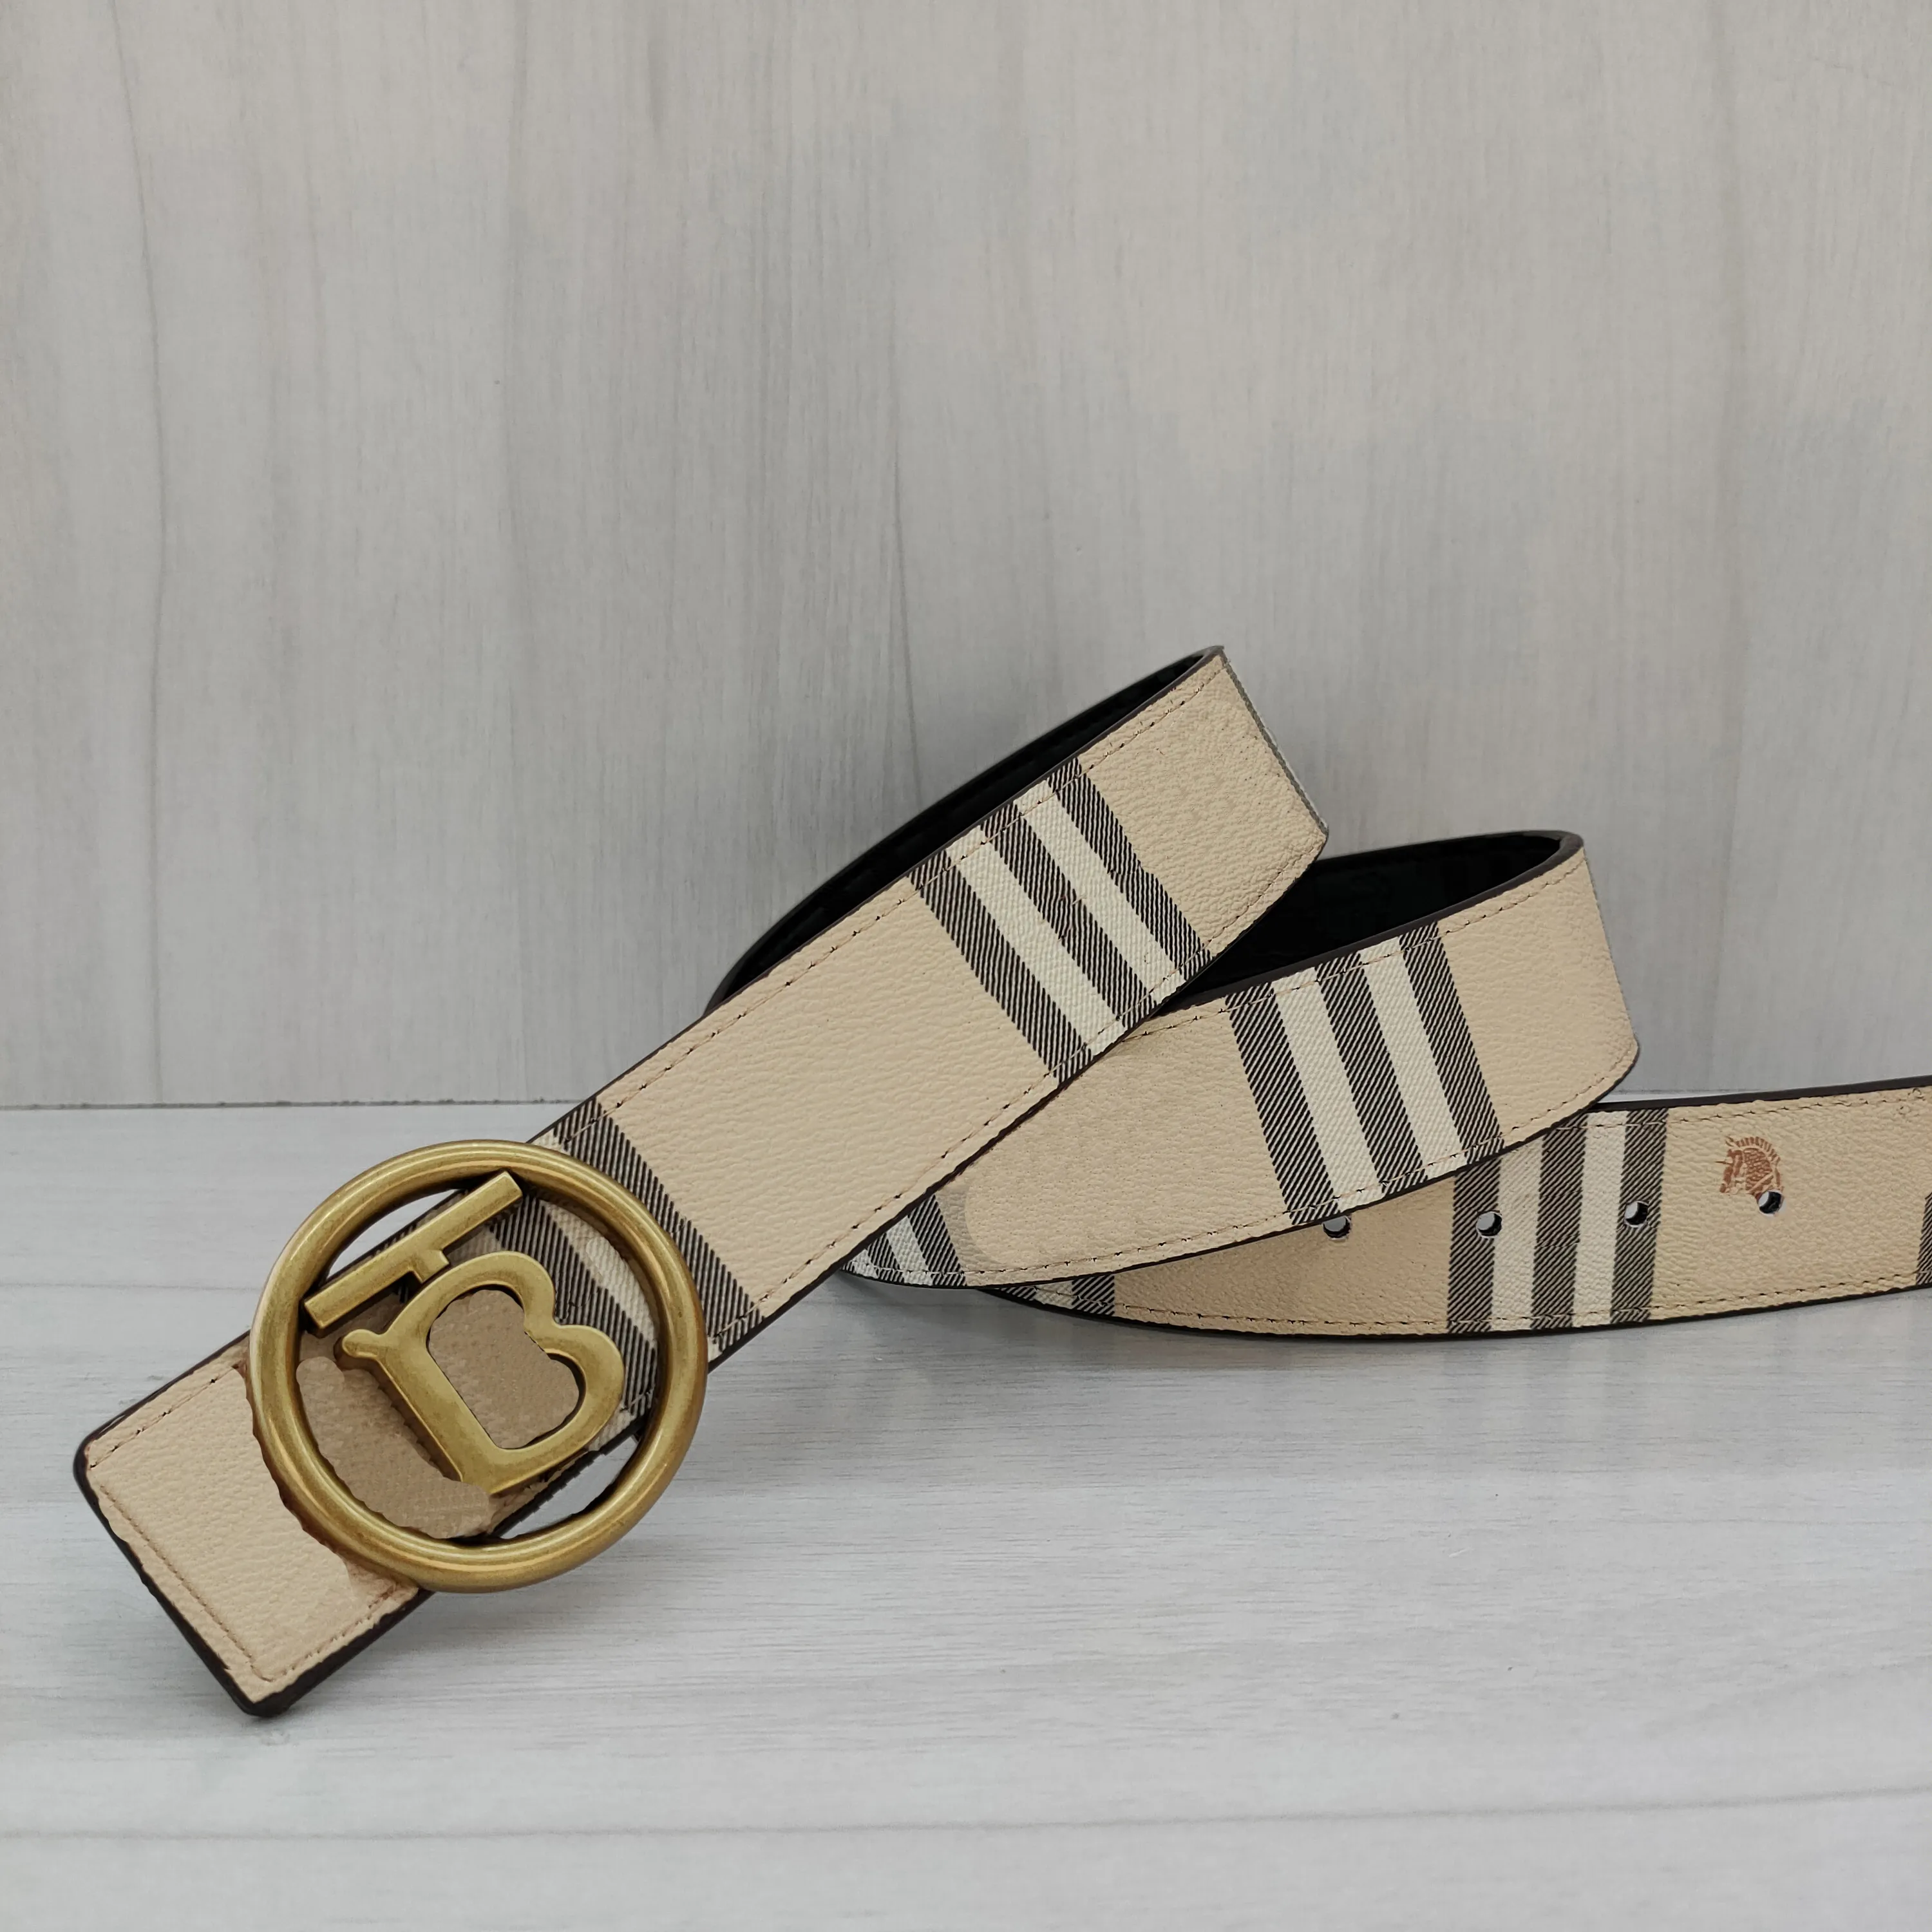 Luxurys designers belt fashion men belts classic pin buckle gold and silver black buckle head striped double-sided casual width 3.8cm size 105-125cm versatile nice